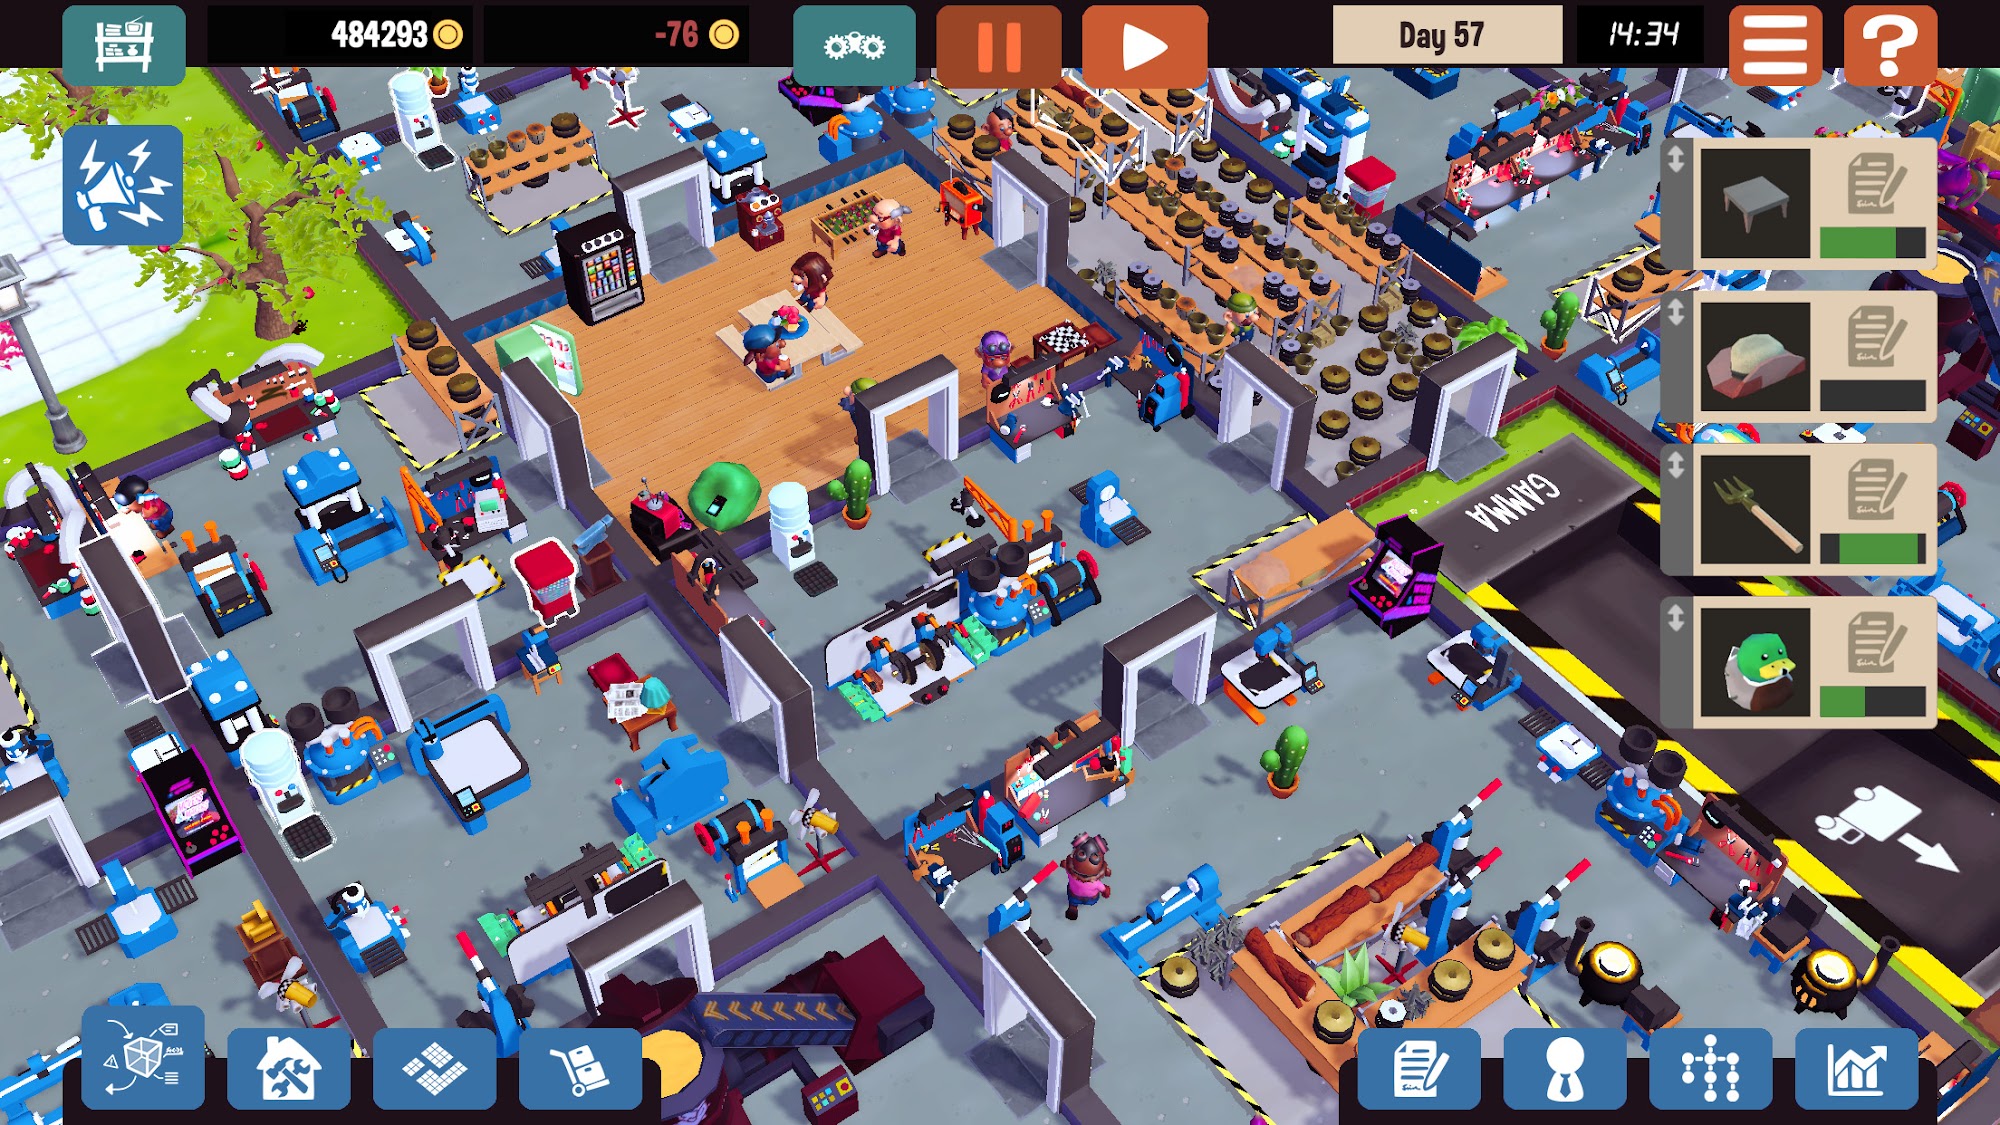 Little Big Workshop - Android game screenshots.